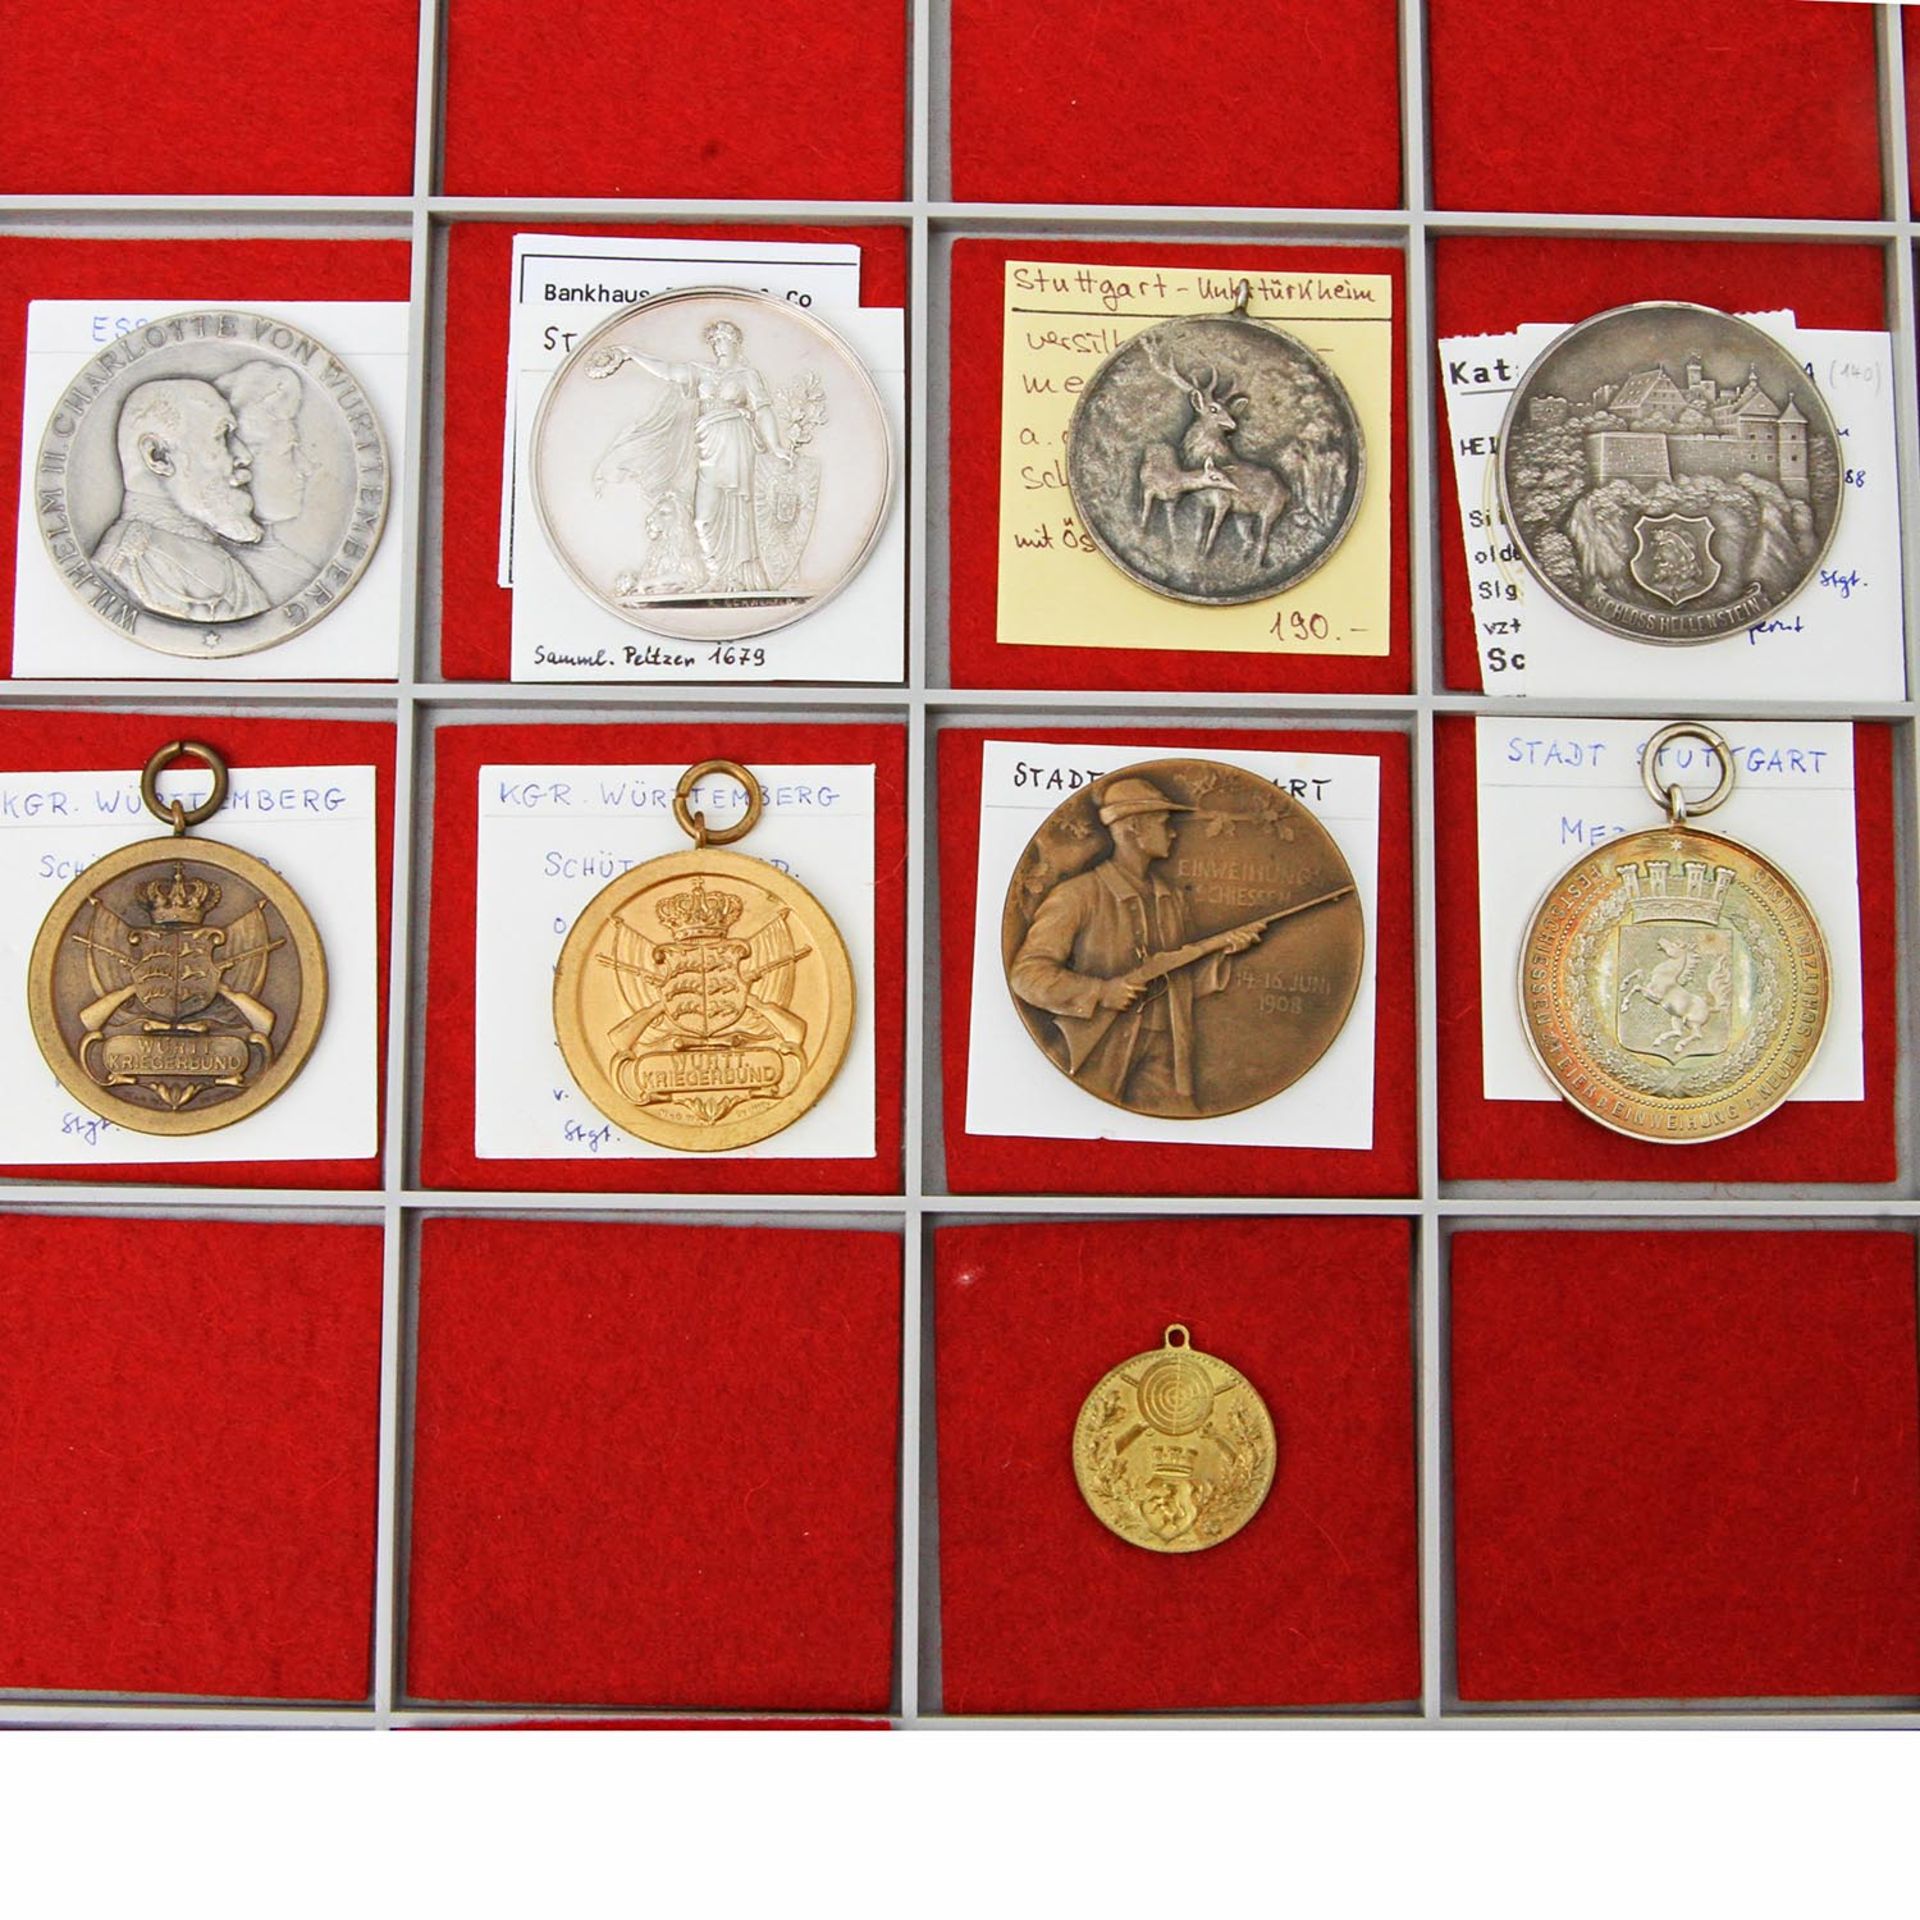 Schützenmedaillen auf Tableau - Konvolut 9 Stück, darunter a) Schützenmedaille 1911 Esslingen, auf